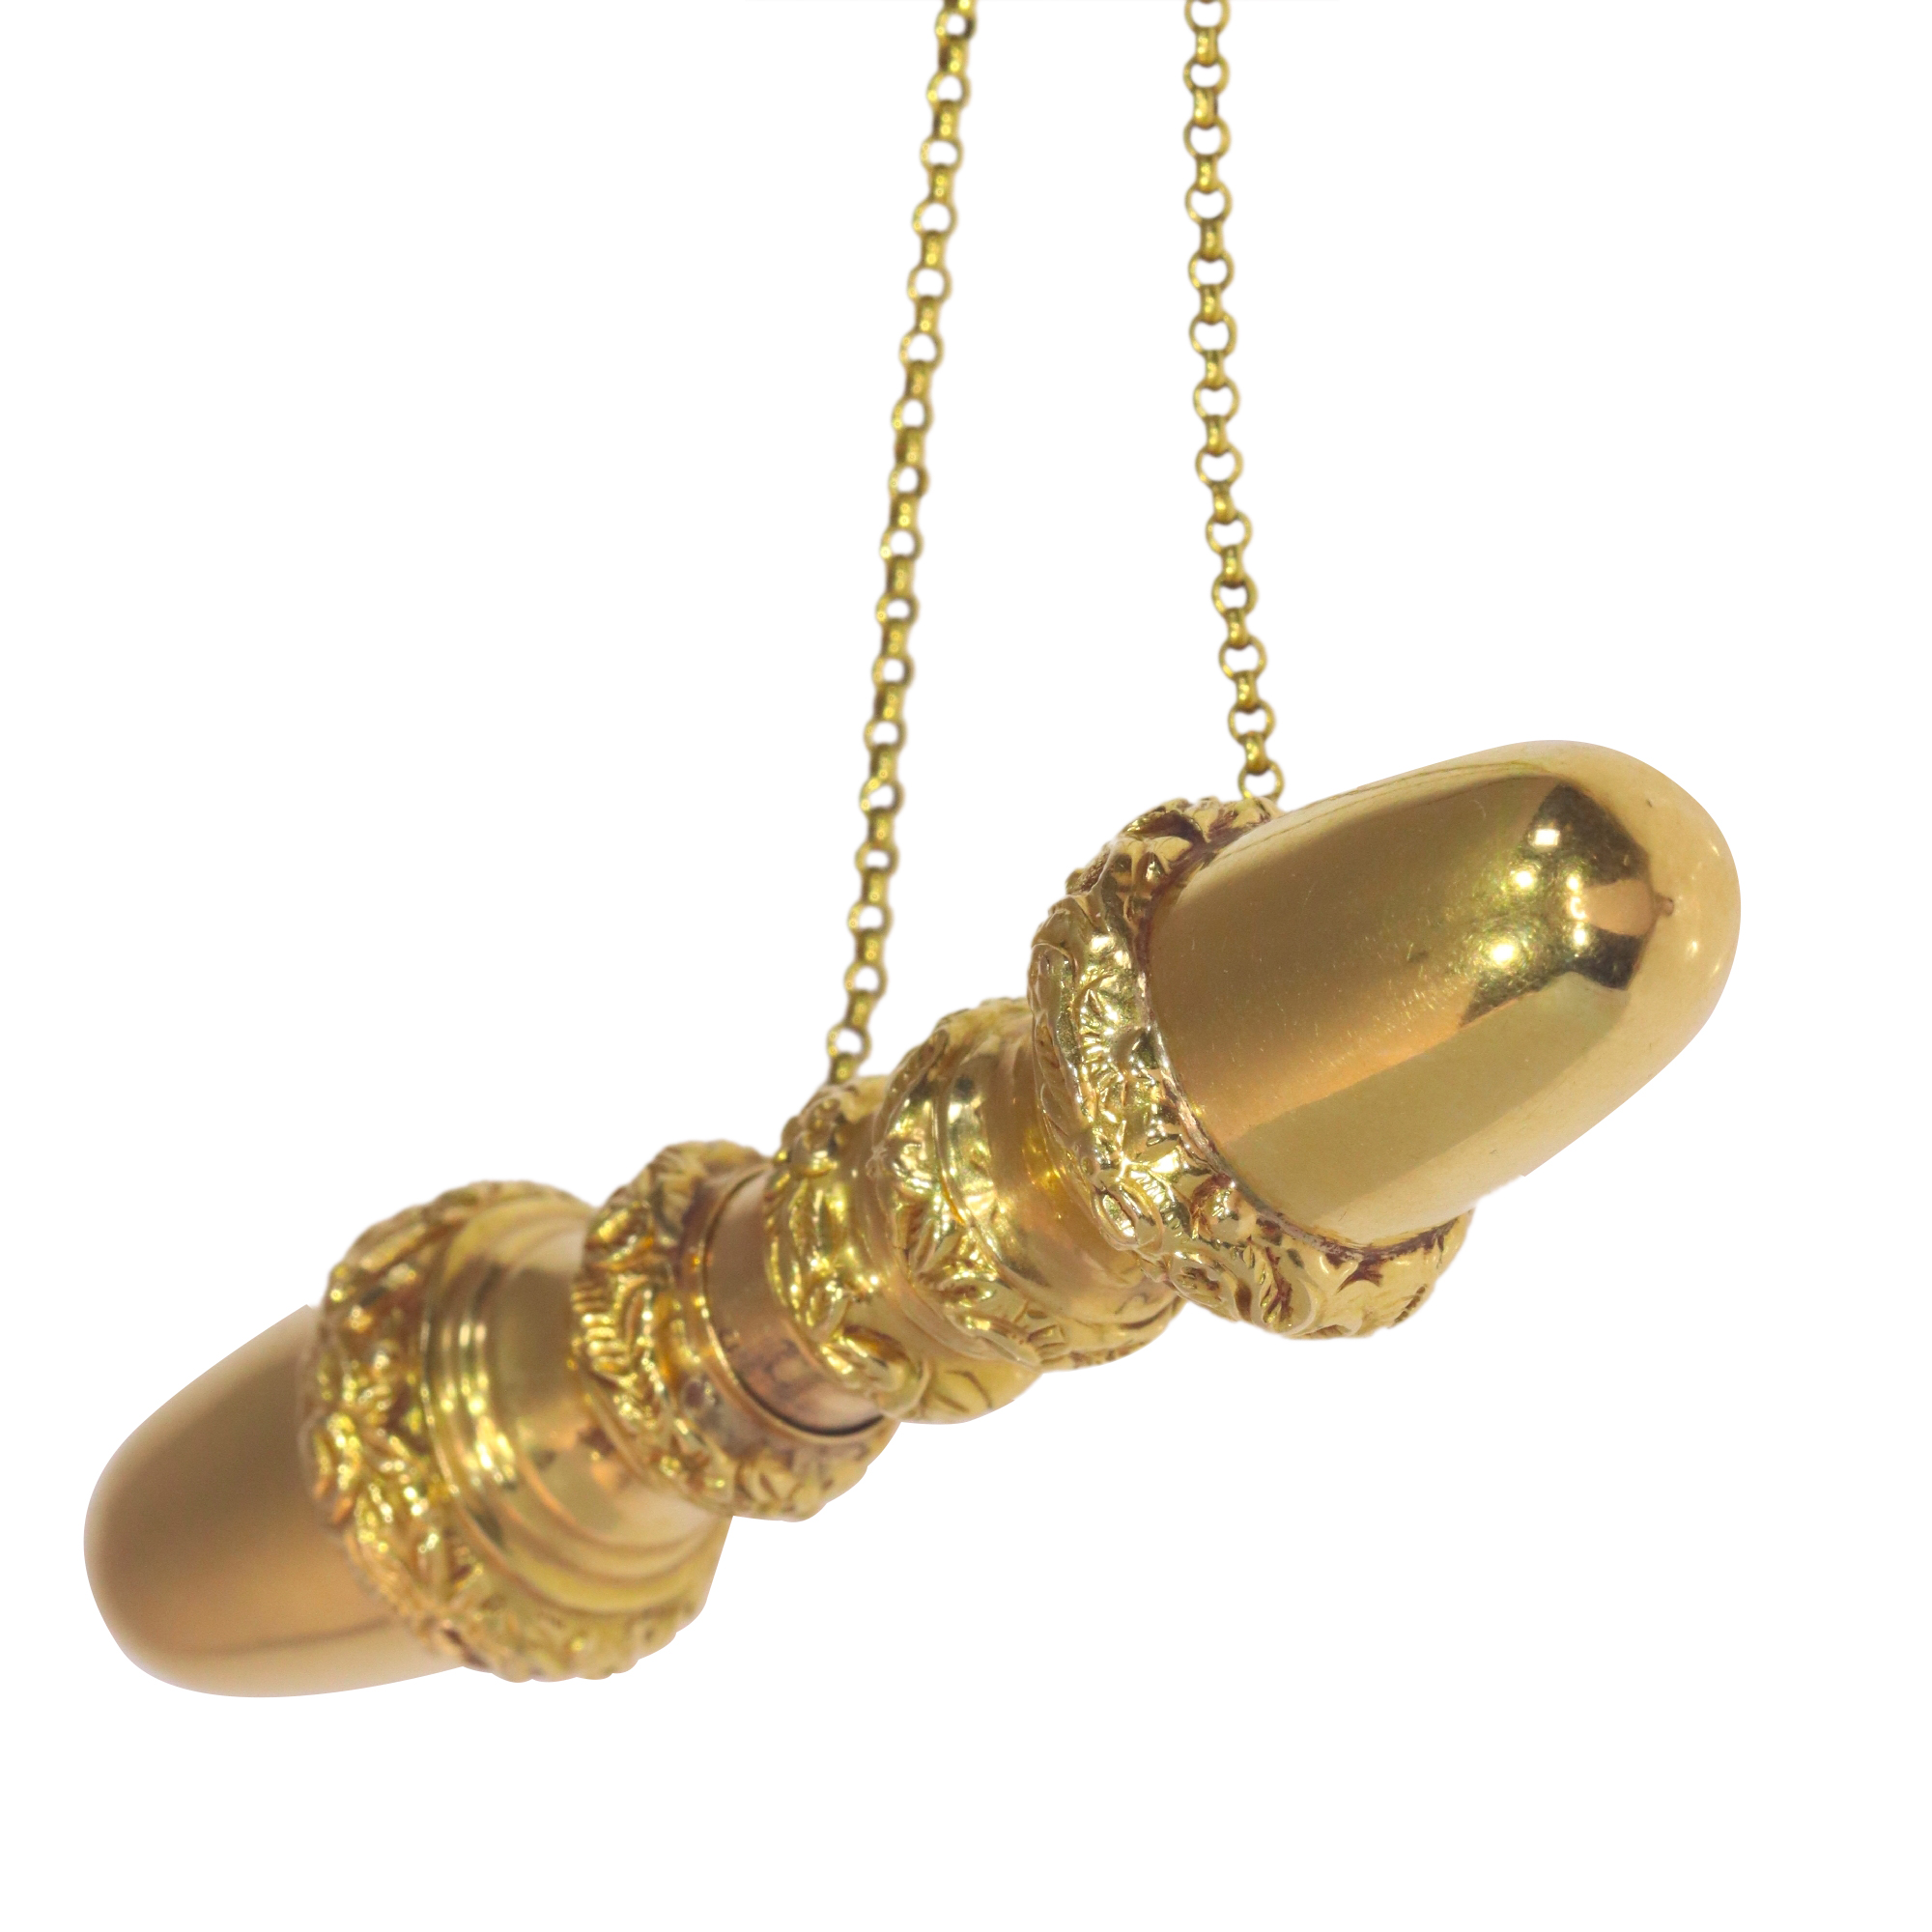 Antique Dutch 18K gold mystery jewel pendant on chain